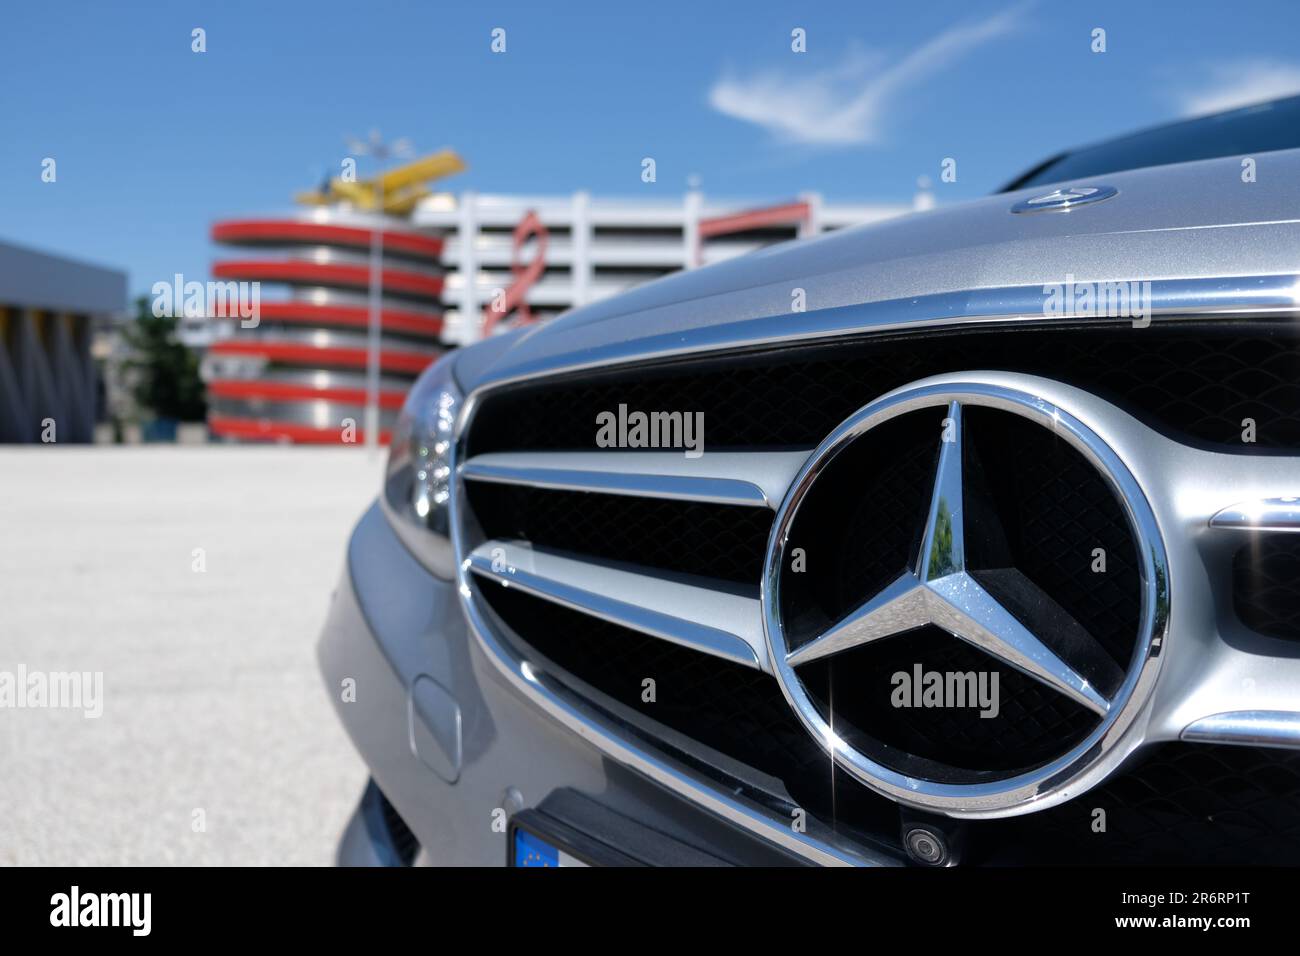 Chrome logo on Mercedes E class Stock Photo